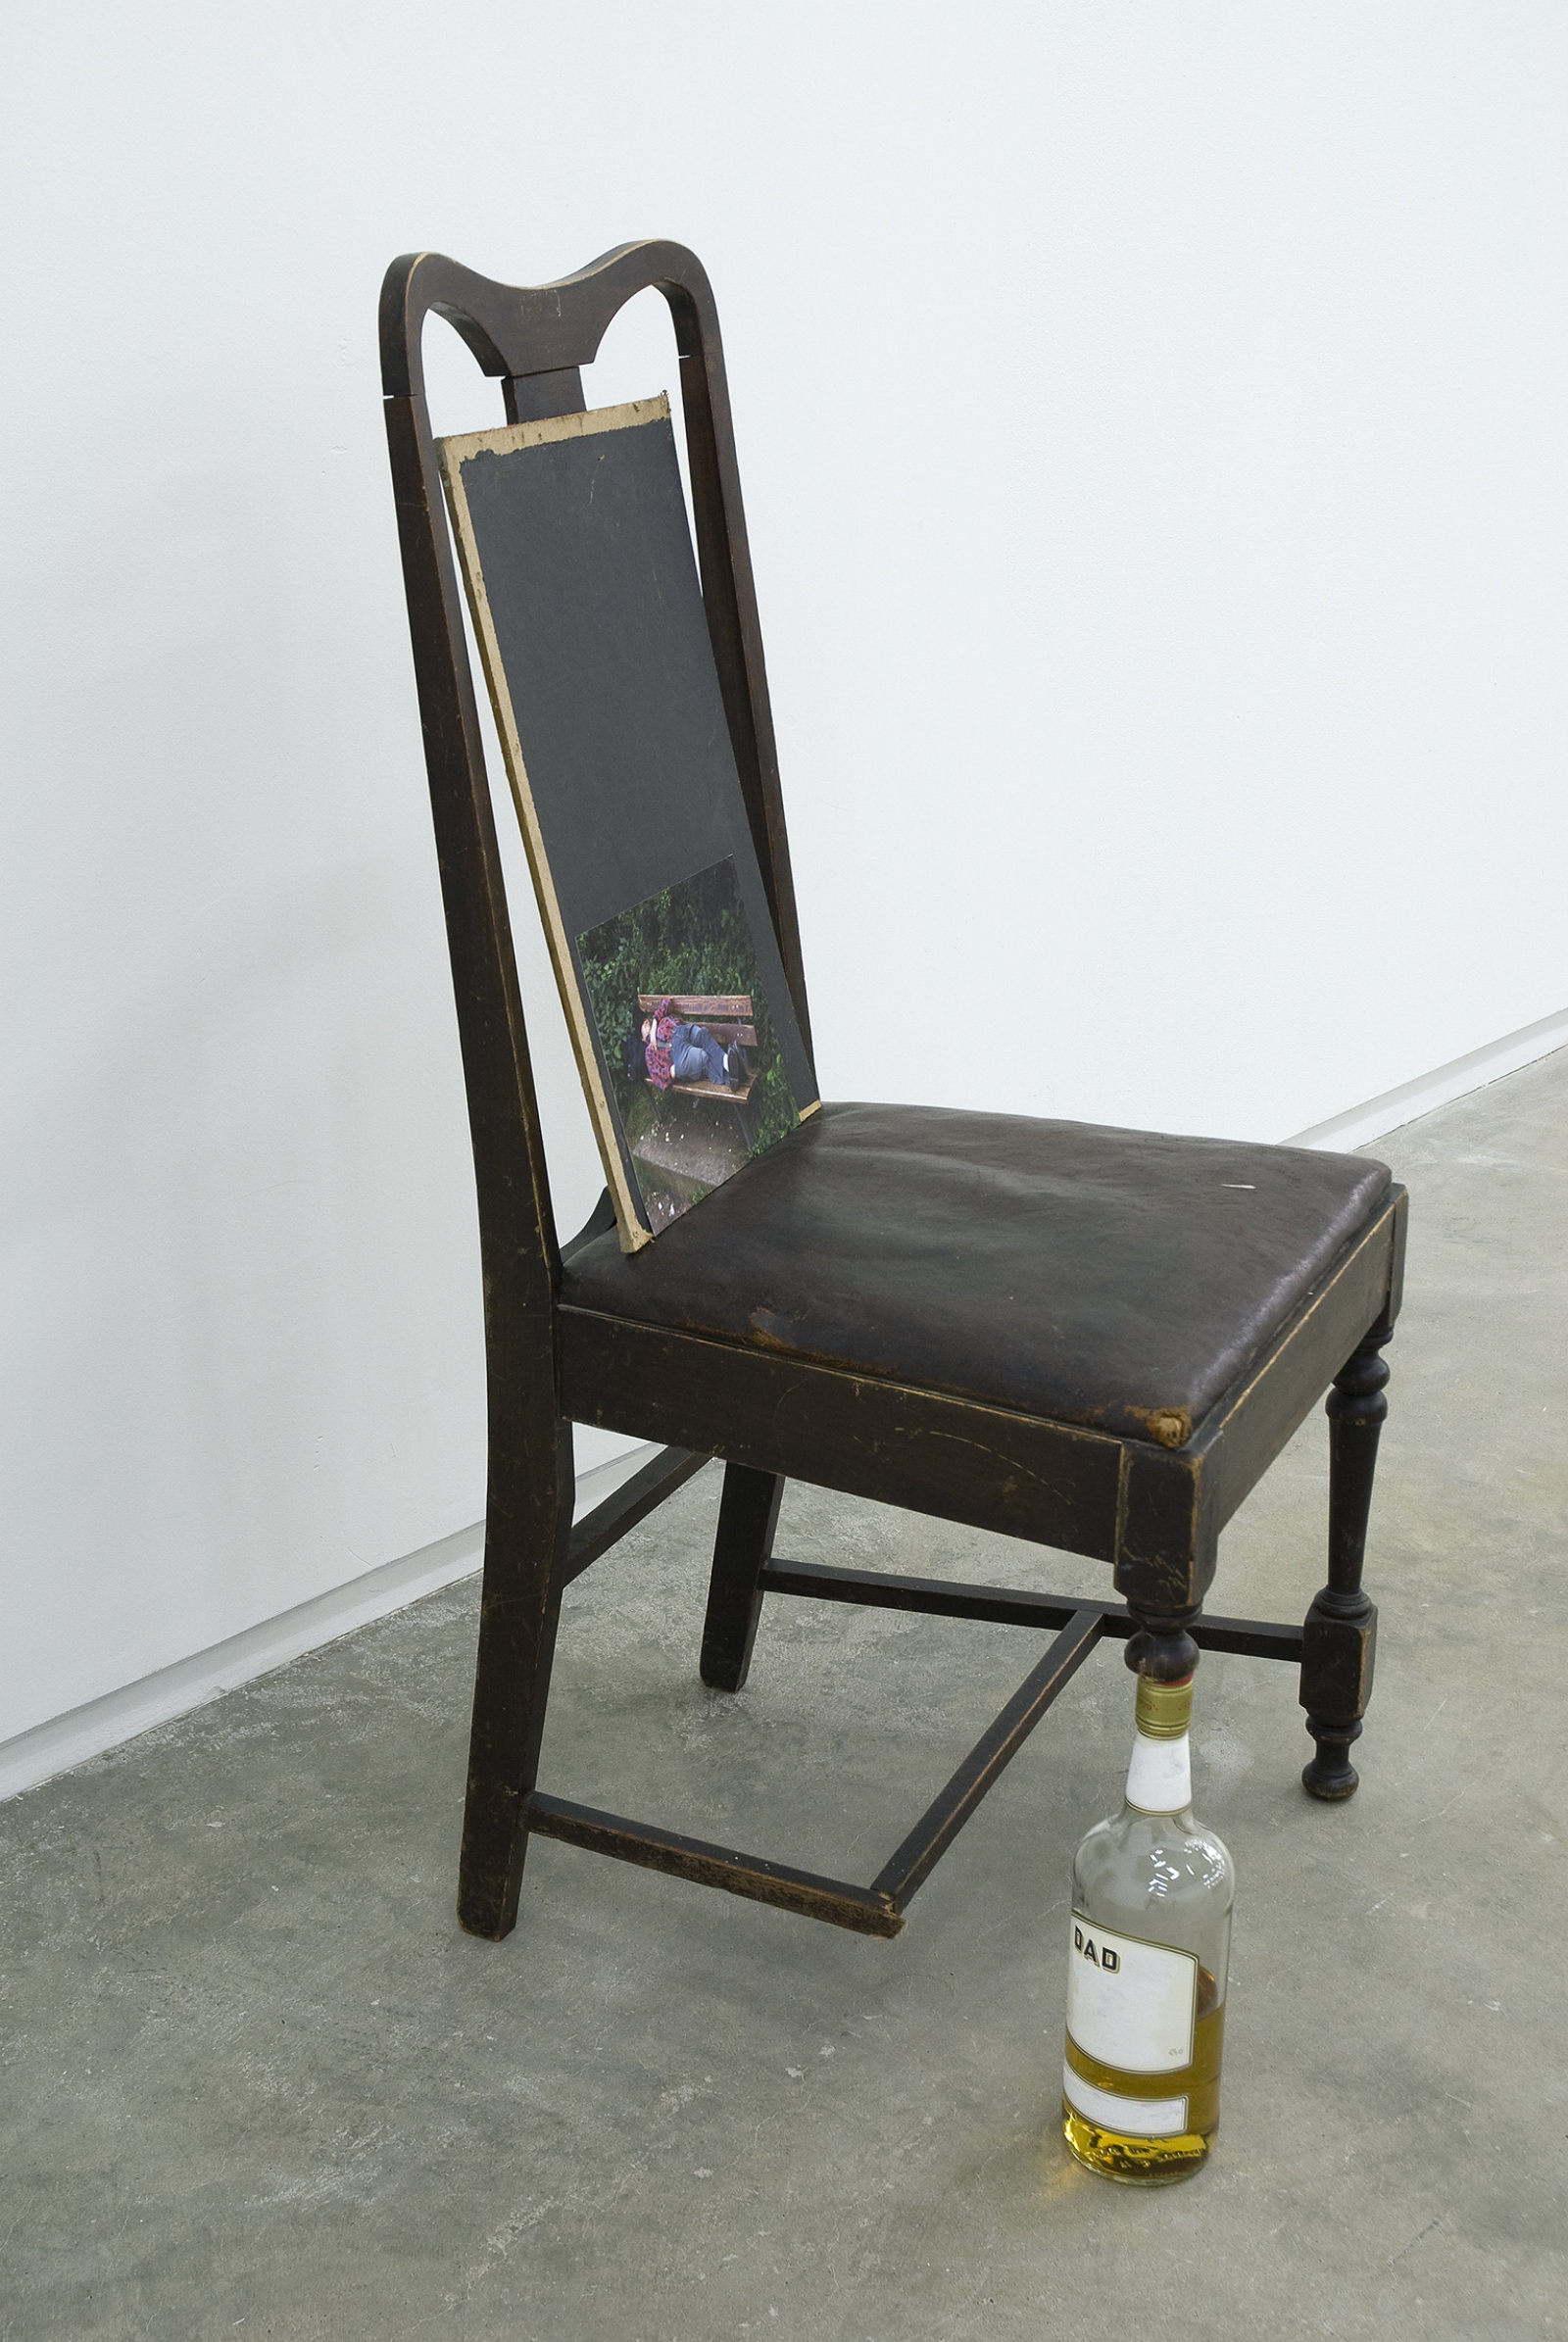 Gareth Moore, Untitled from Uncertain Pilgrimage, 2009, broken chair, whiskey, paint, wood, ‘Friend in Theatre, Asleep’ lightjet print, 40 x 19 x 18 in. (102 x 47 x 44 cm)